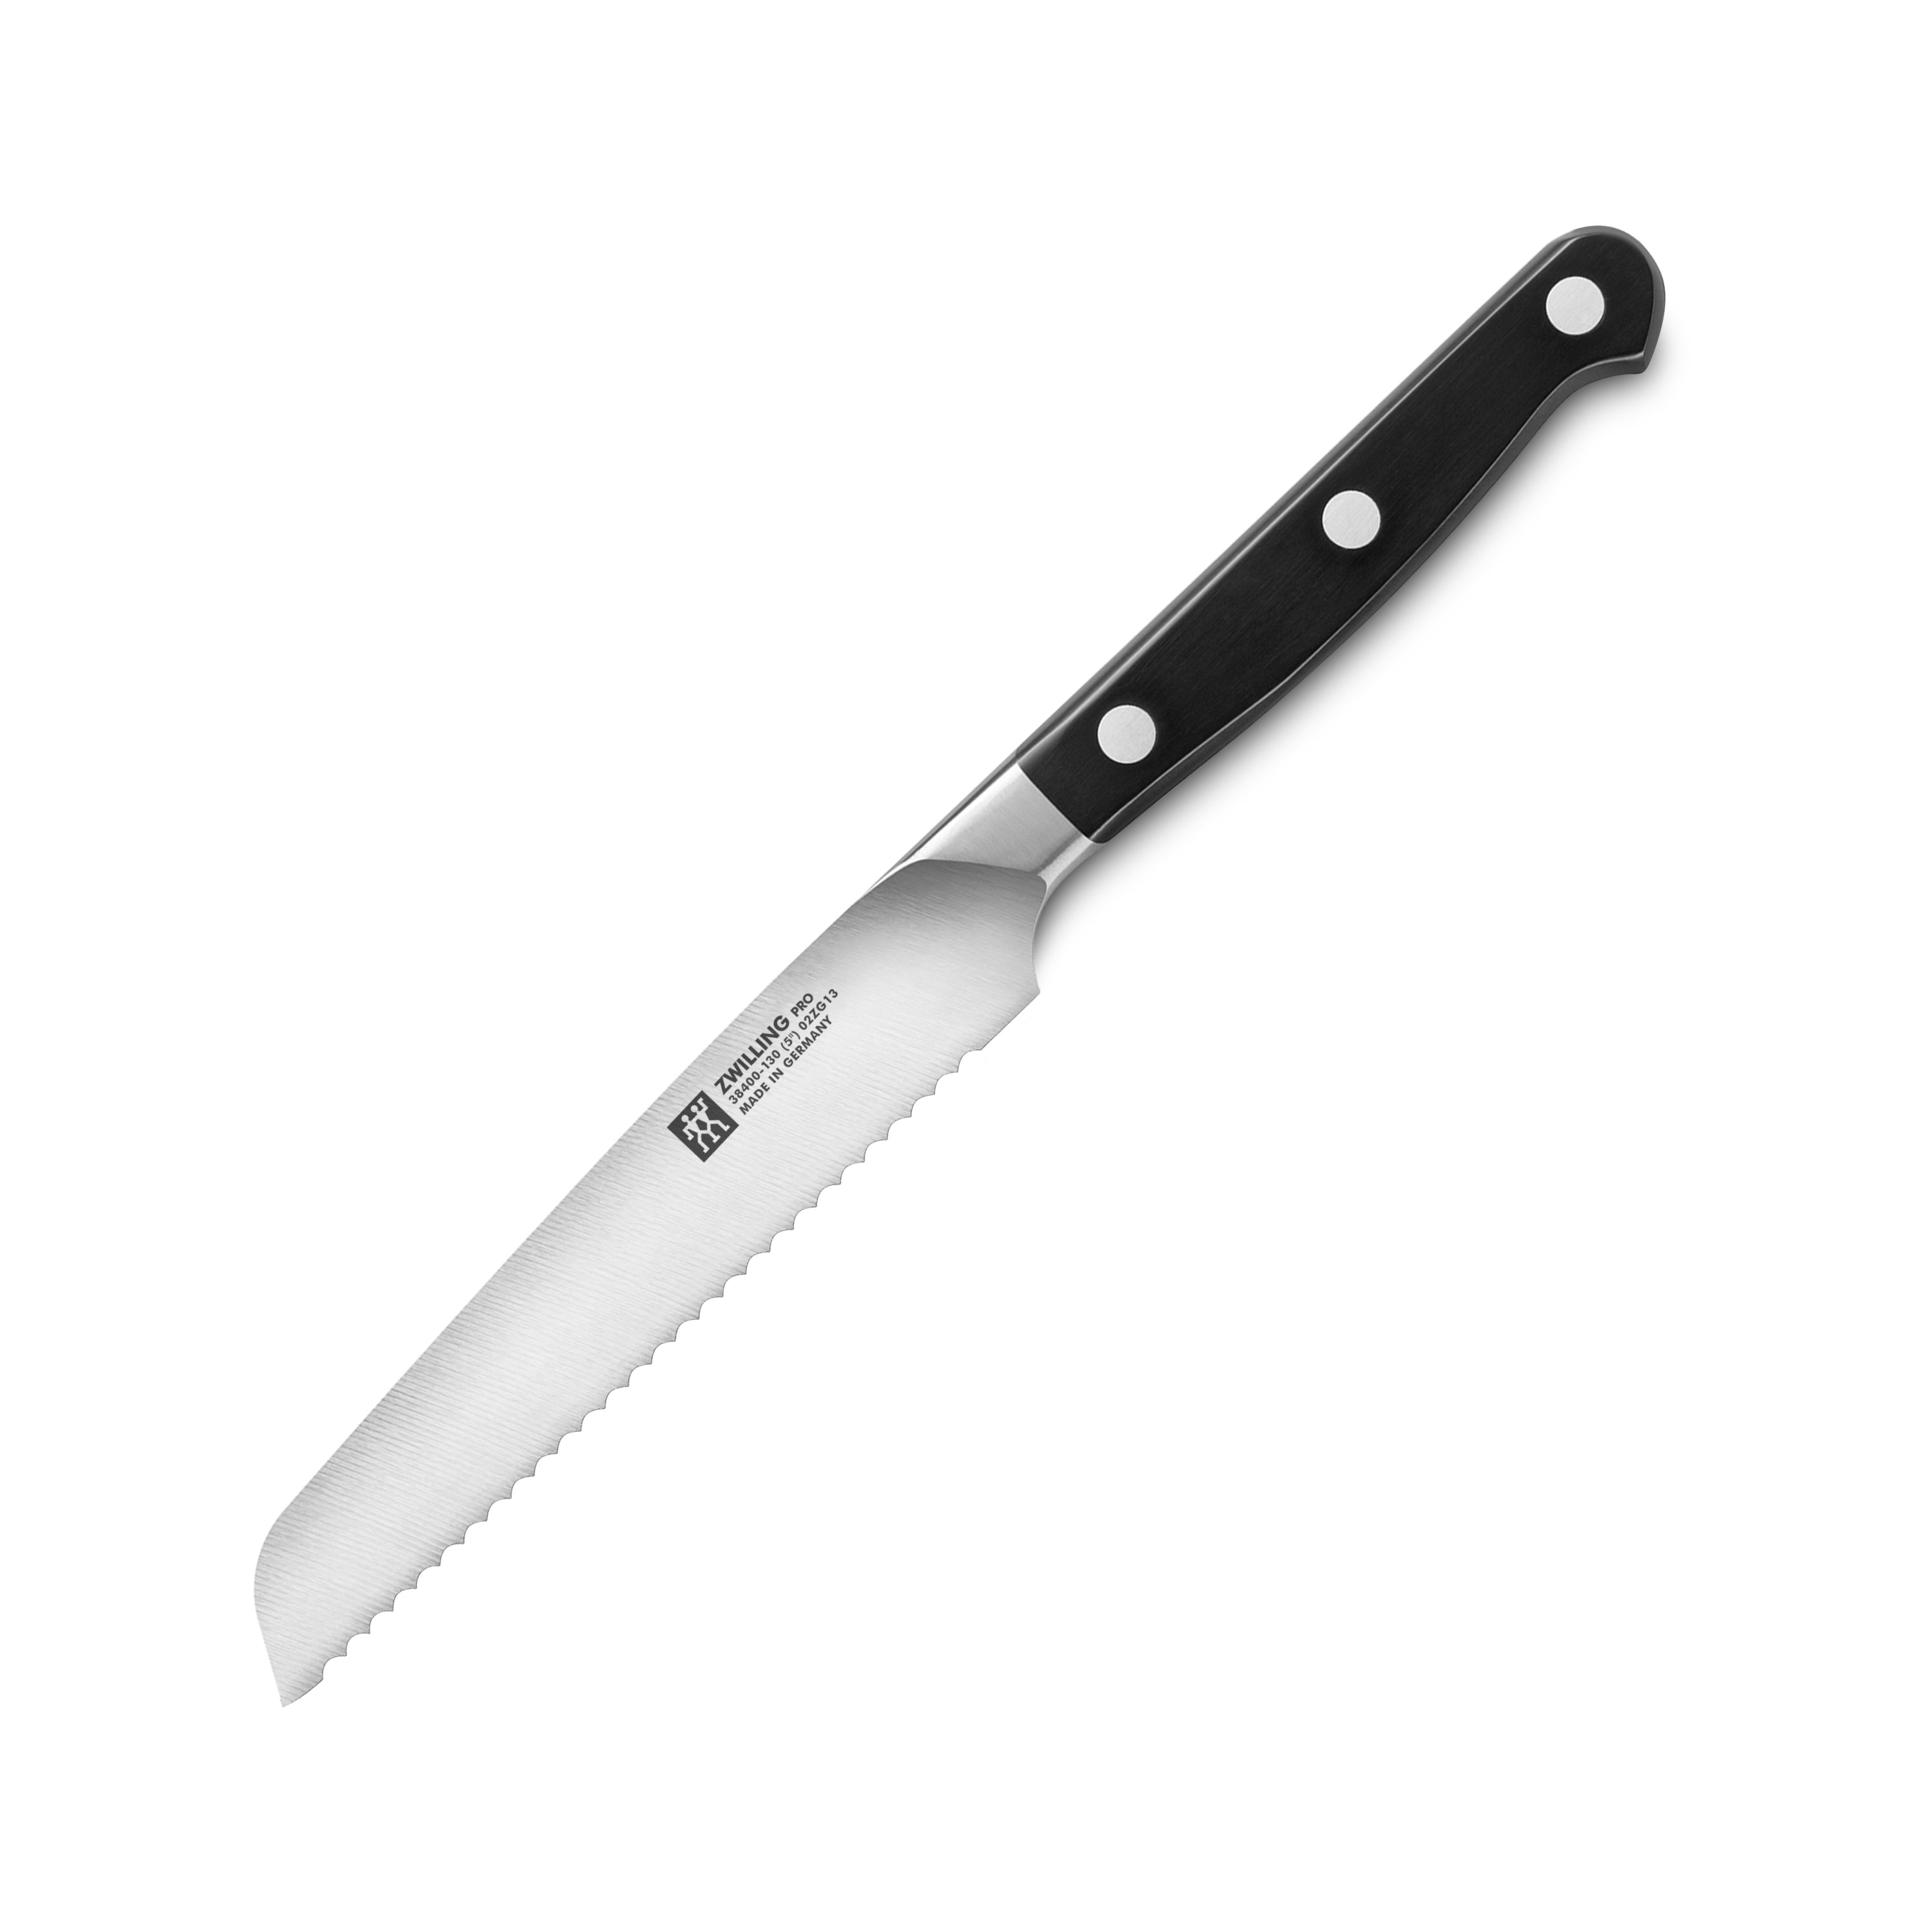 5 Serrated/Utility Knife